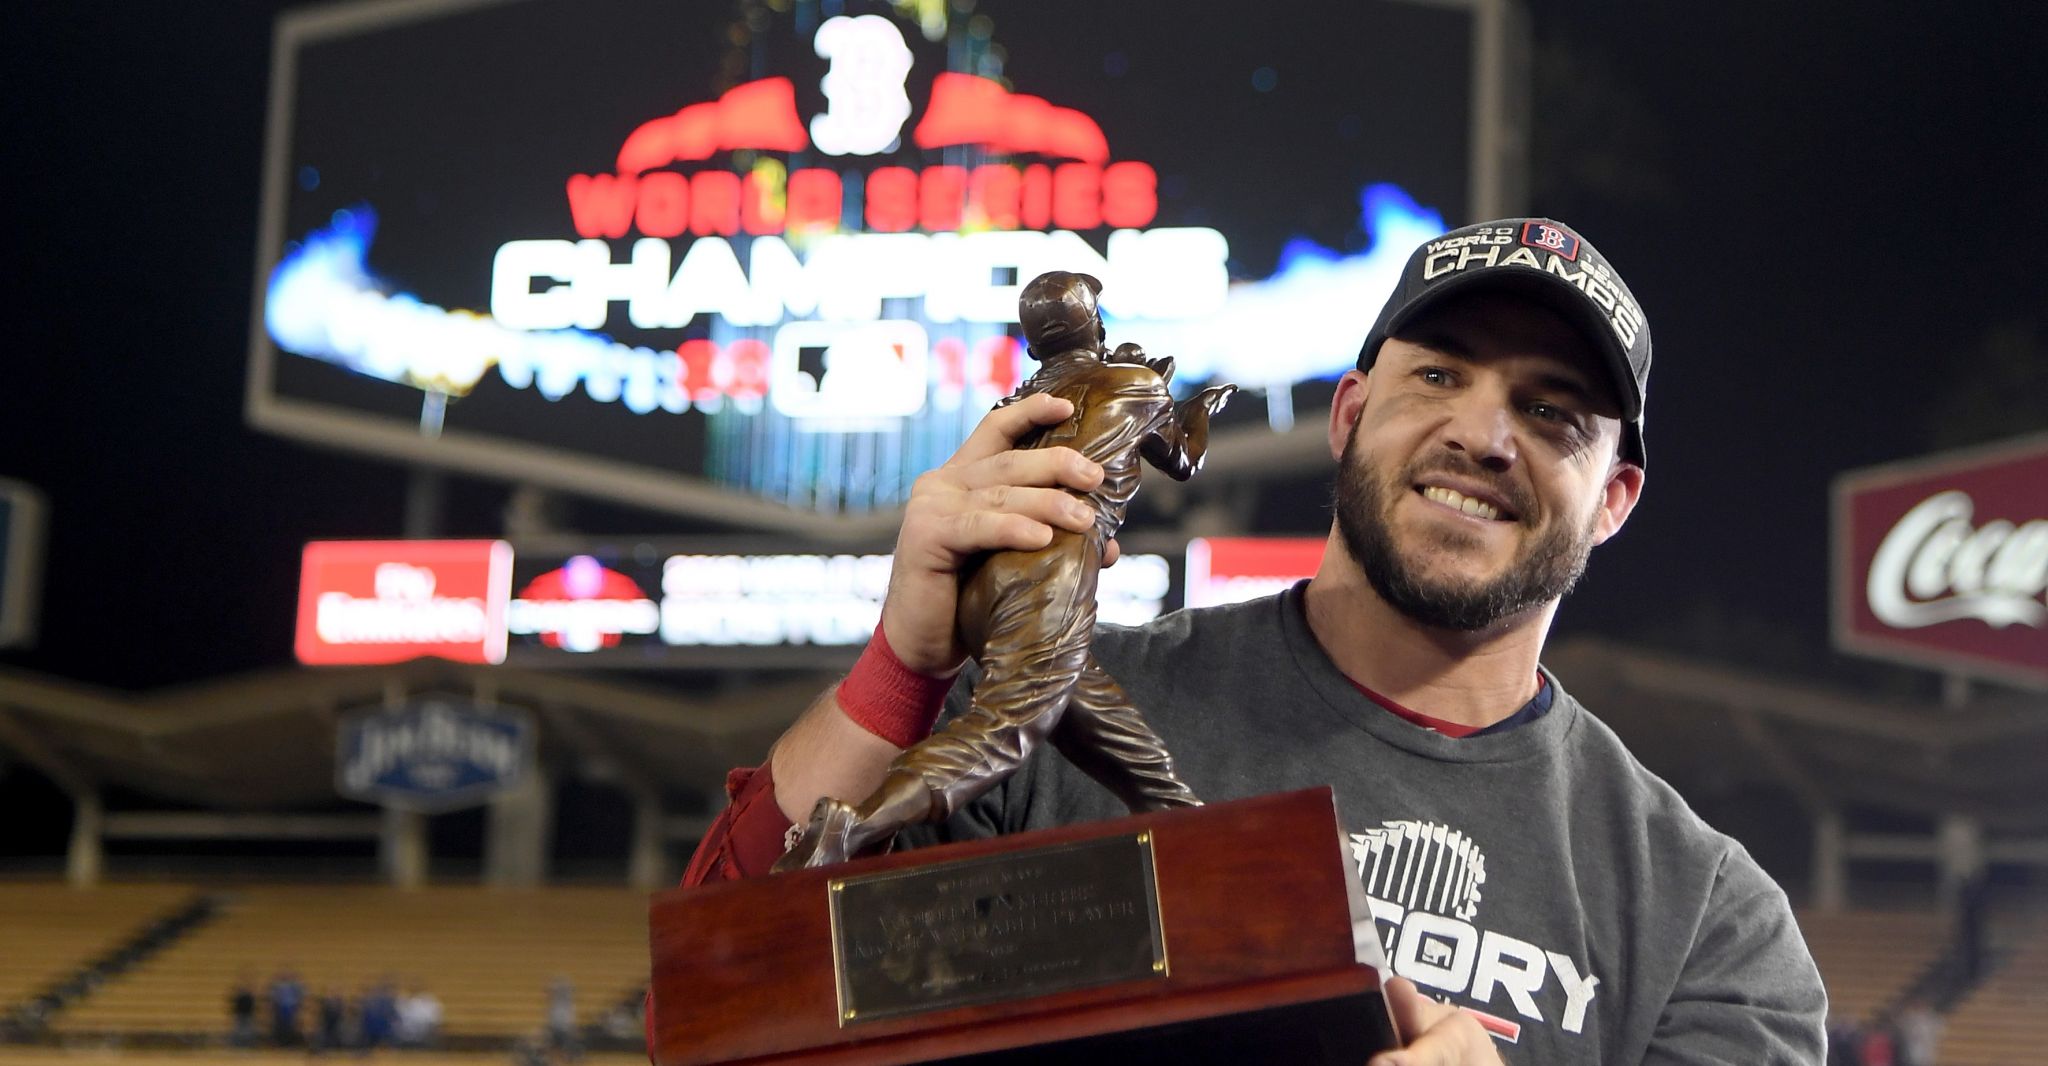 VIDEO: Awkward World Series MVP Trophy Presentation Shows